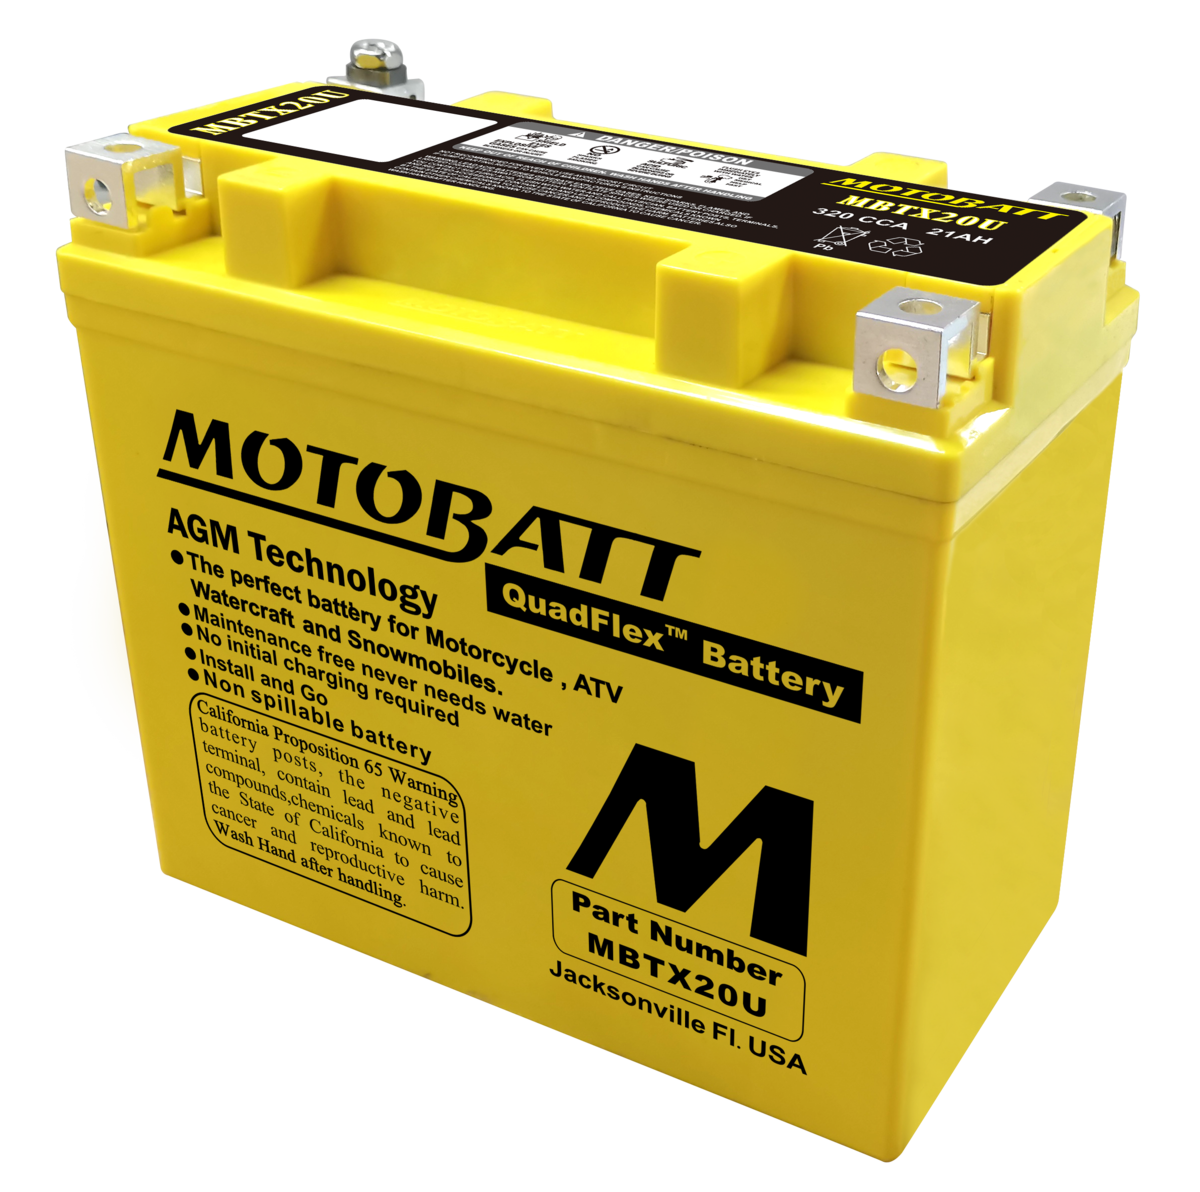 Battery MBTX20U Motobat Jet Ski Marine Jet Initial charged Ready to use Maintenance free MOTOBATT